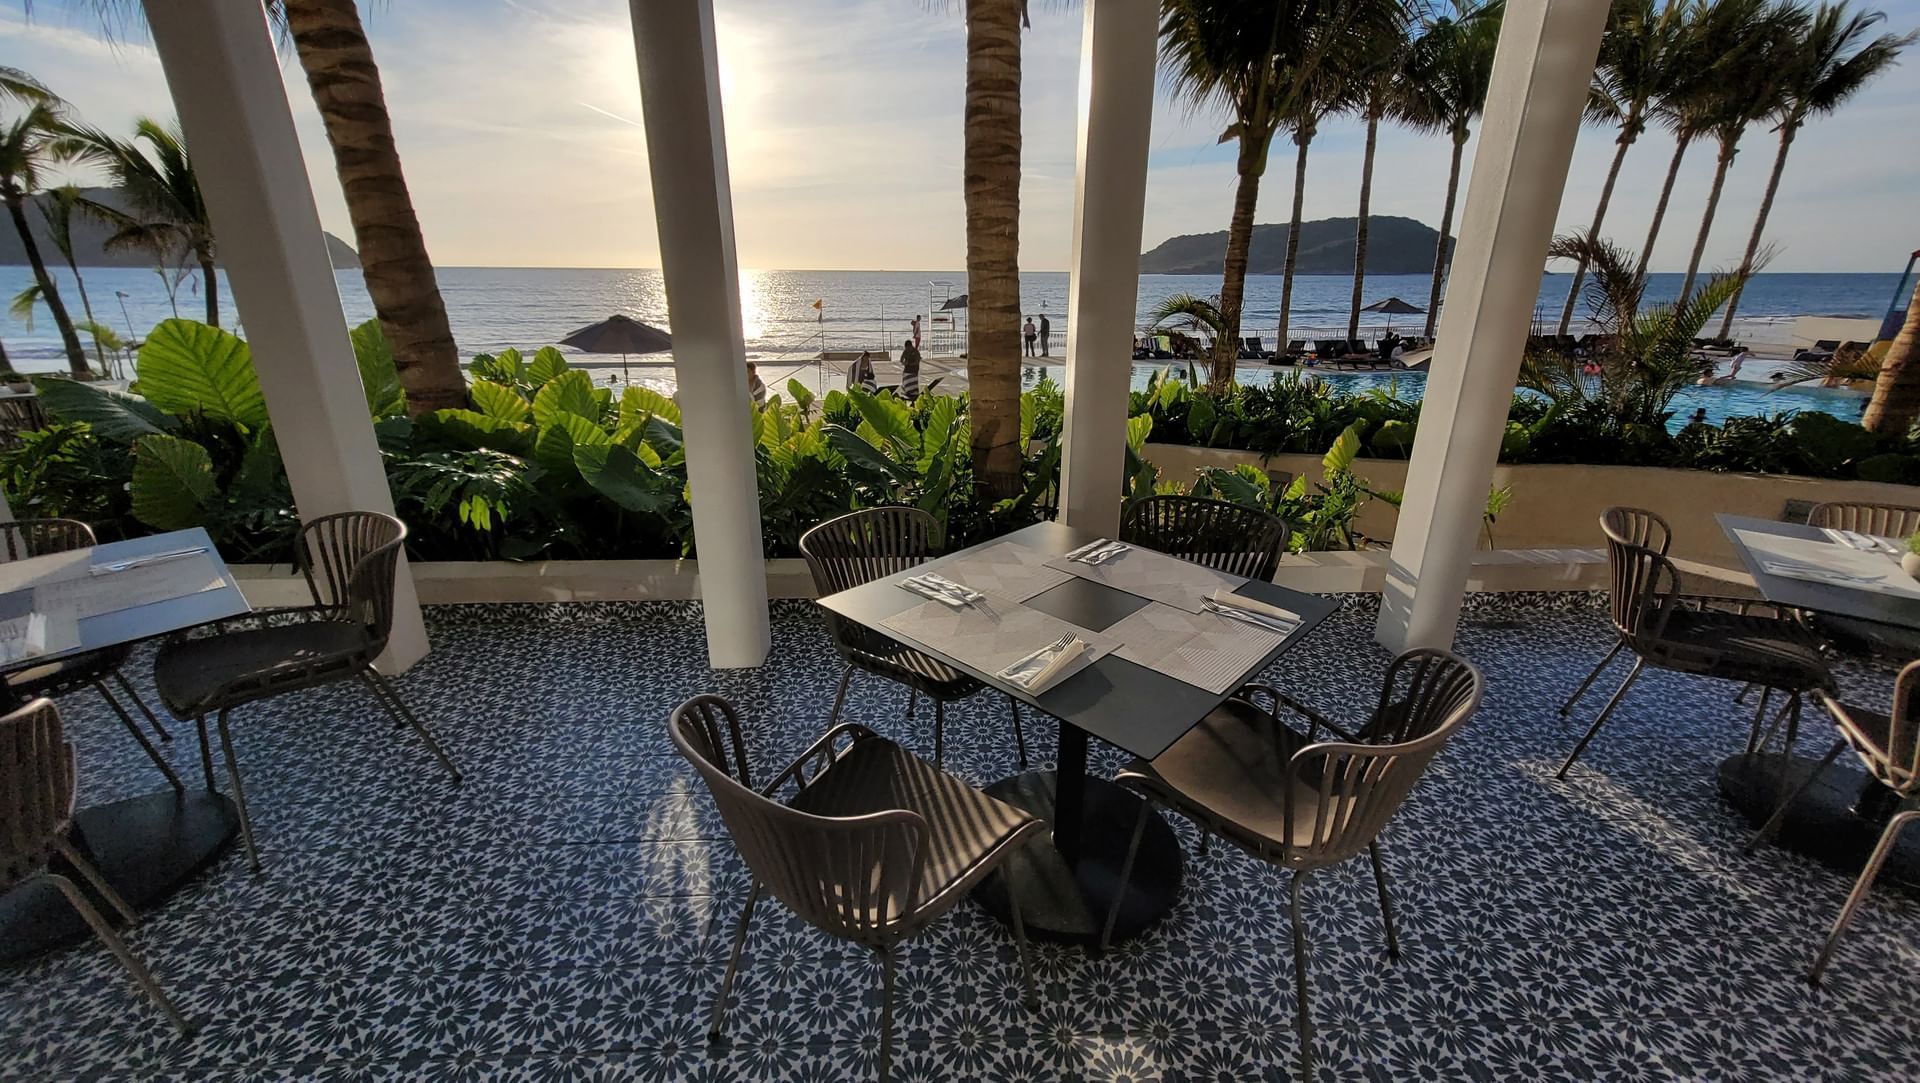 Outdoor restaurant with ocean view at Viaggio Resort Mazatlan